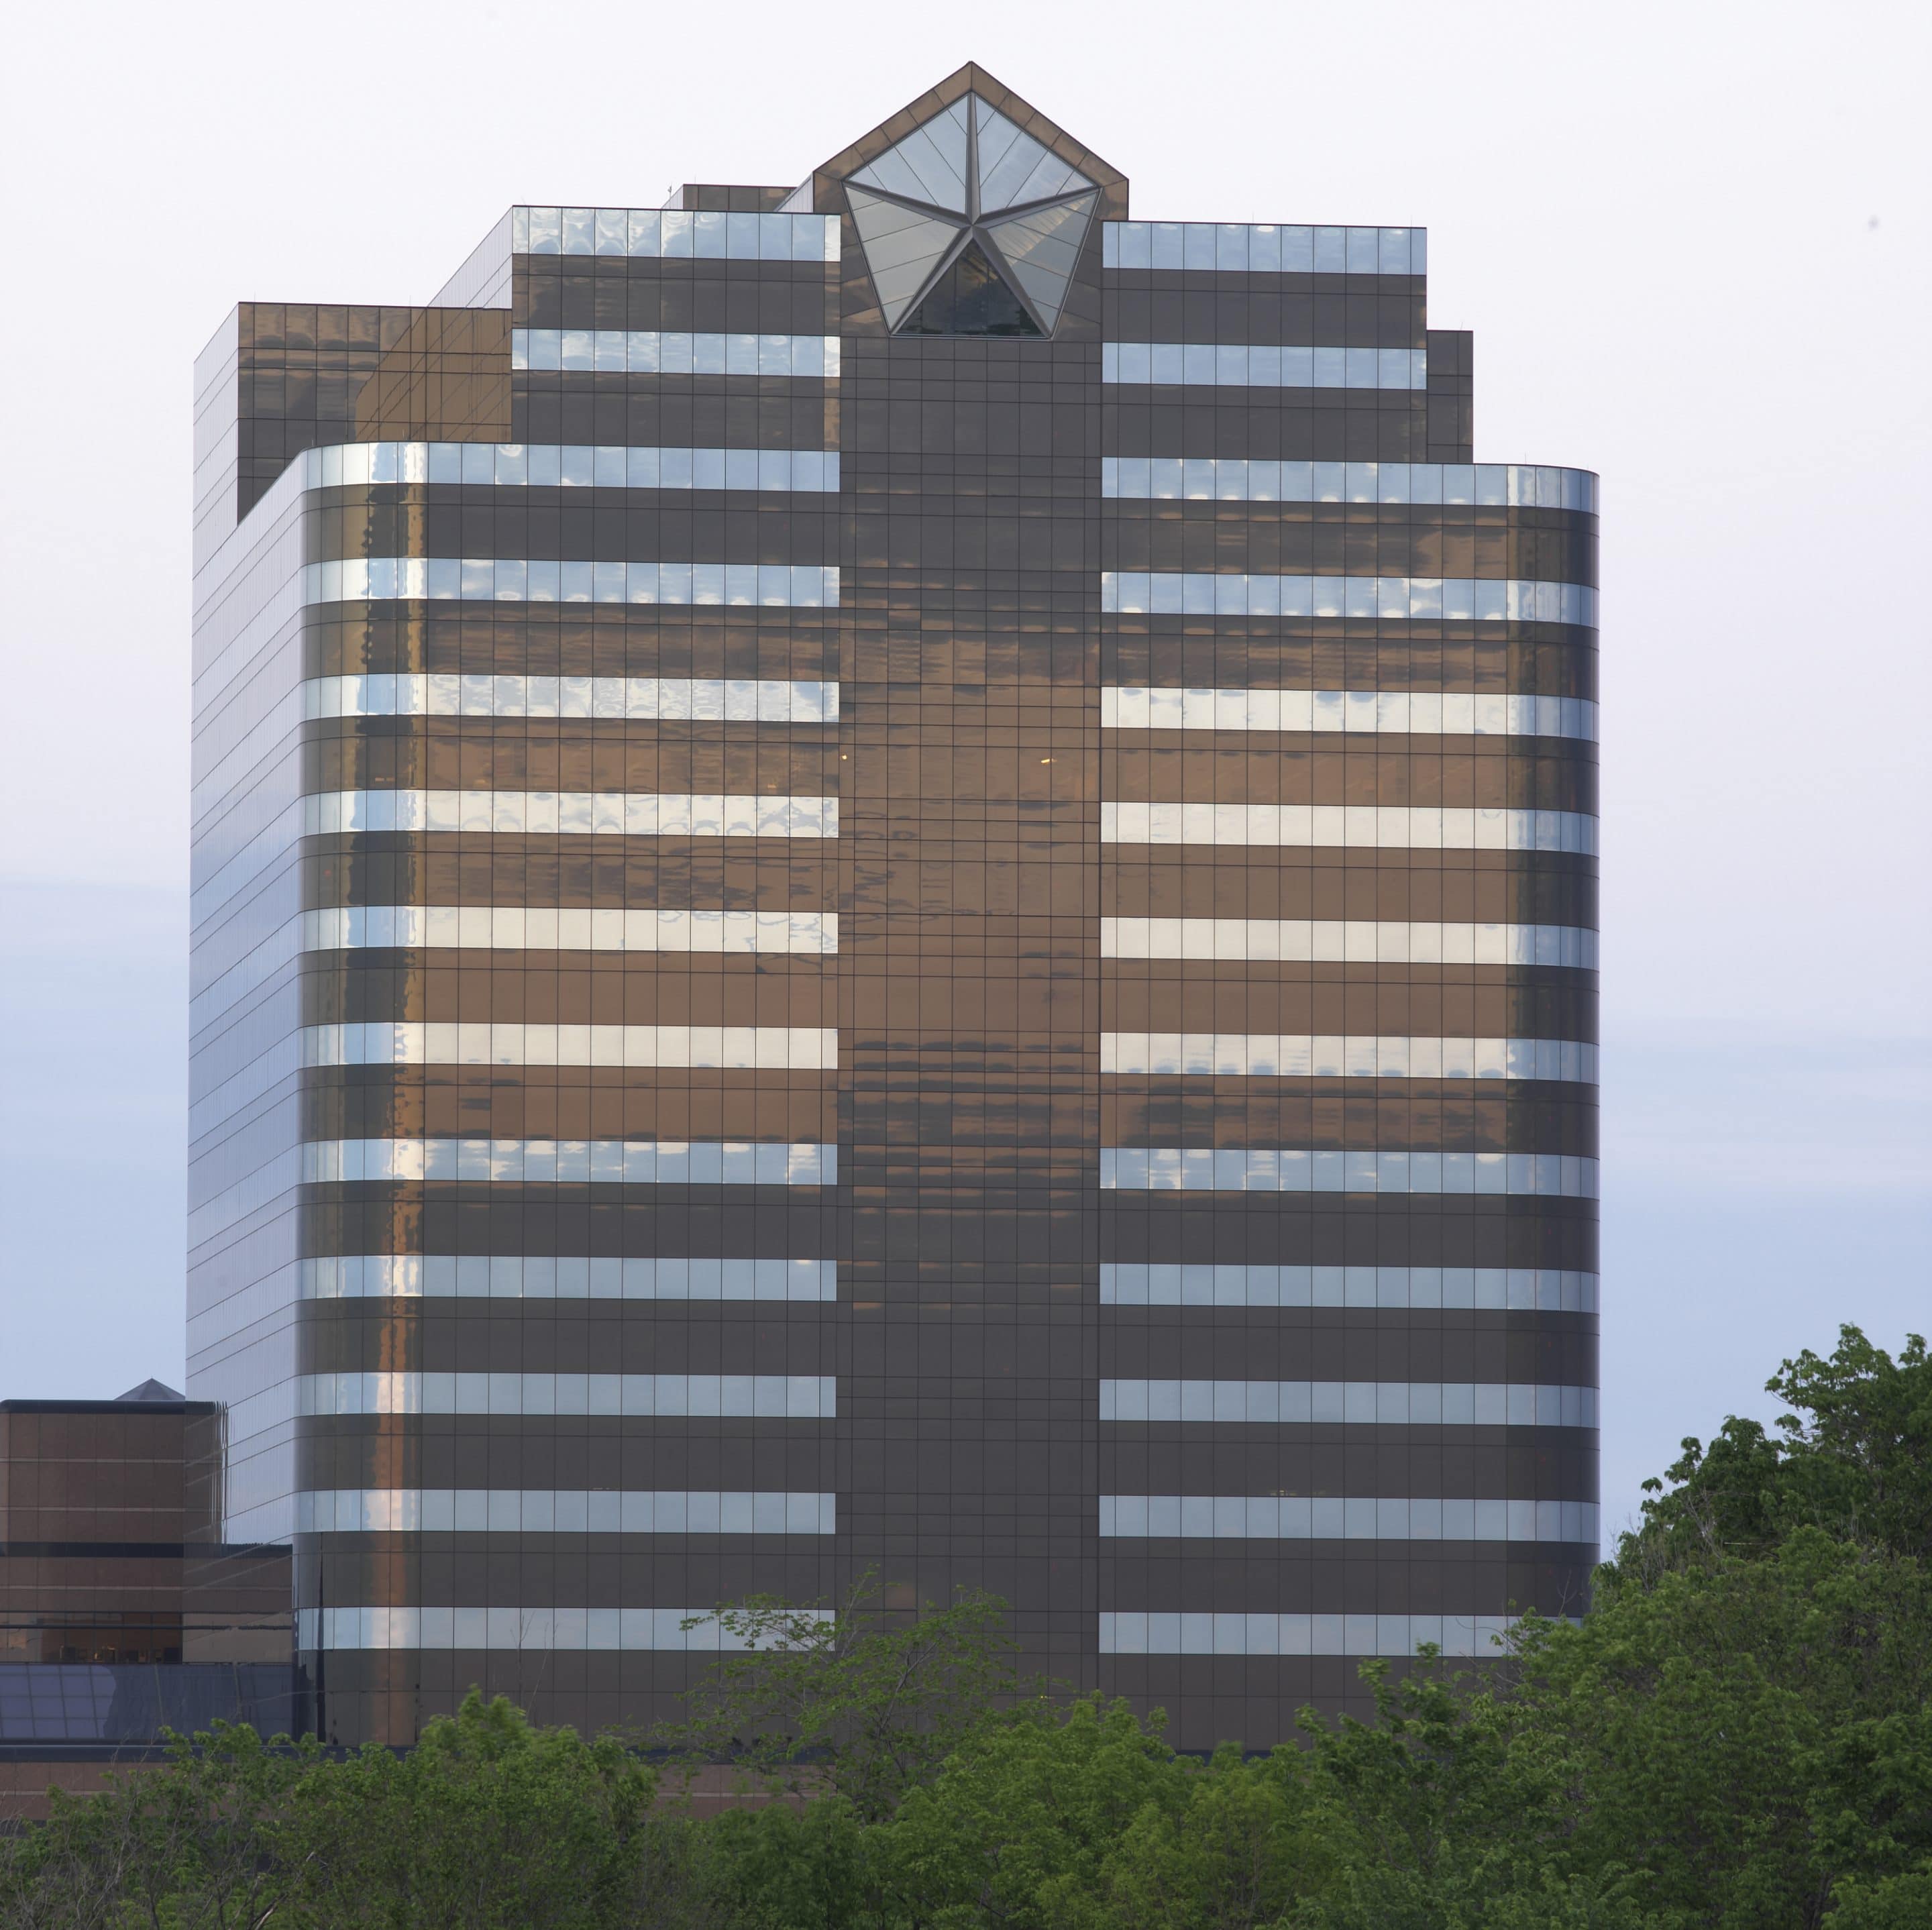 Chrysler corporation - headquarters